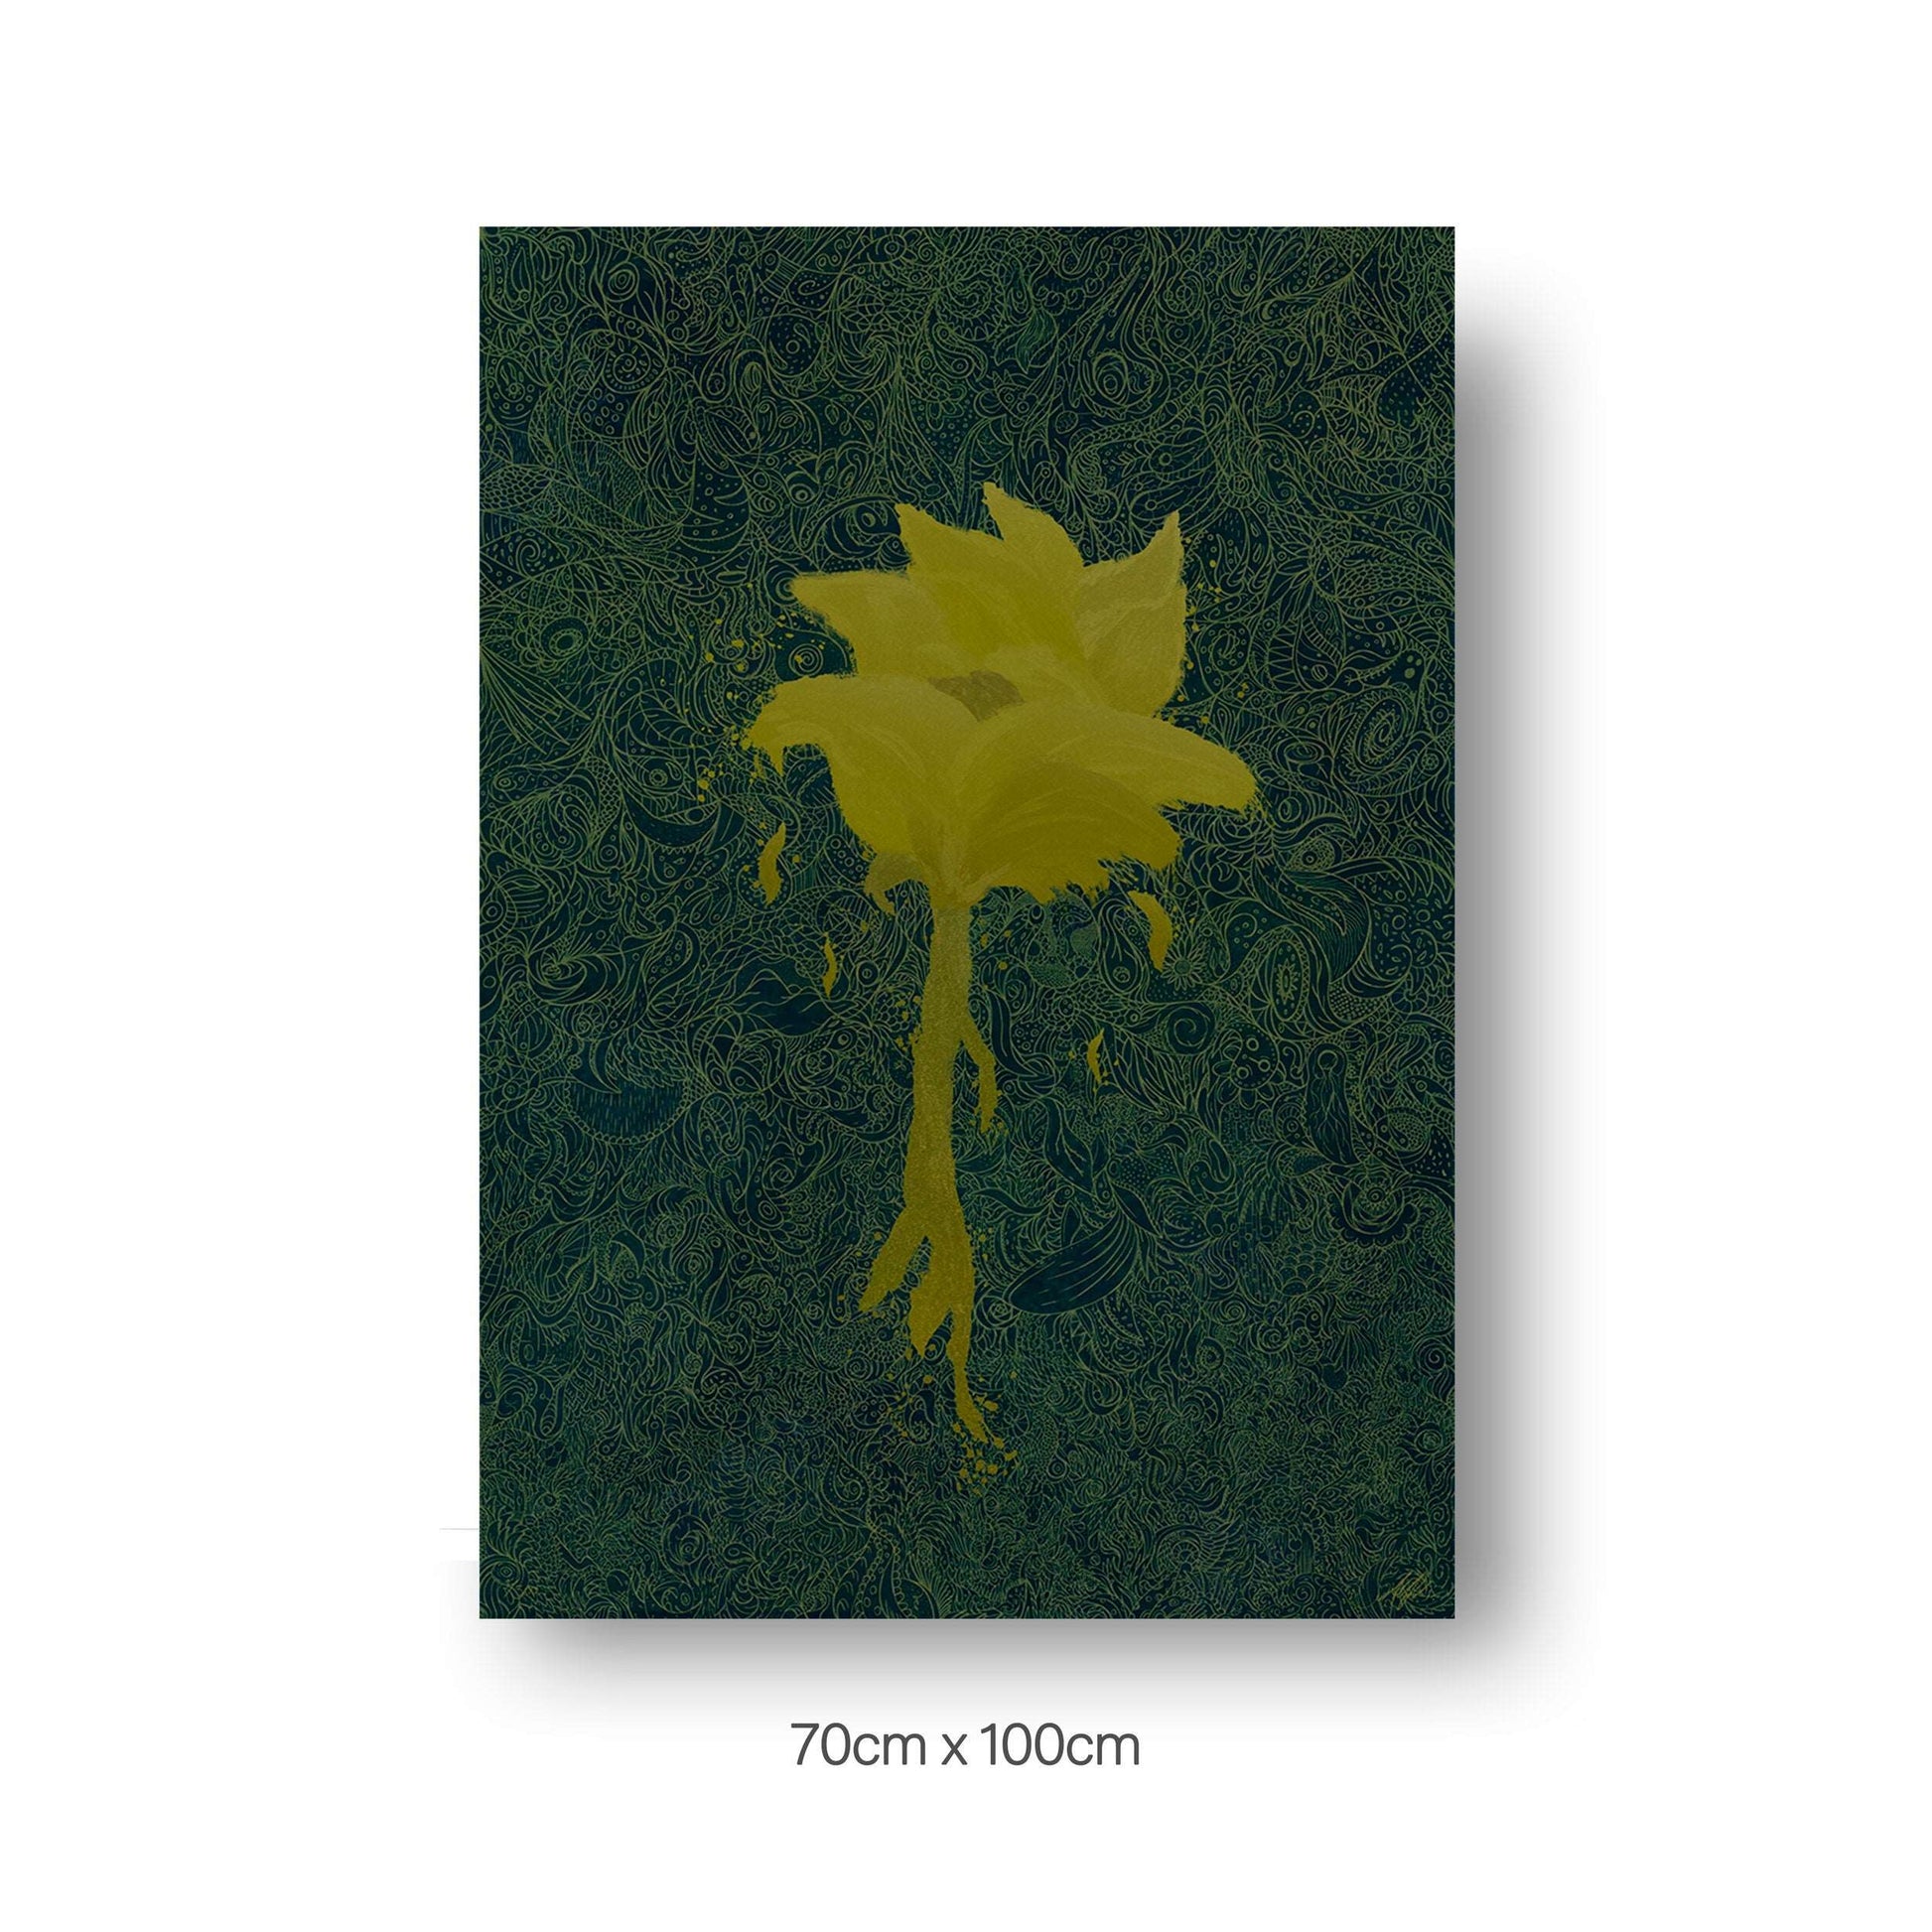 NOKUKO - Art - Alan Pedersen - ALANTHEROCK - Trust - Listen to me, myself - Limited edition - Golden confident - 70cmx100cm print 